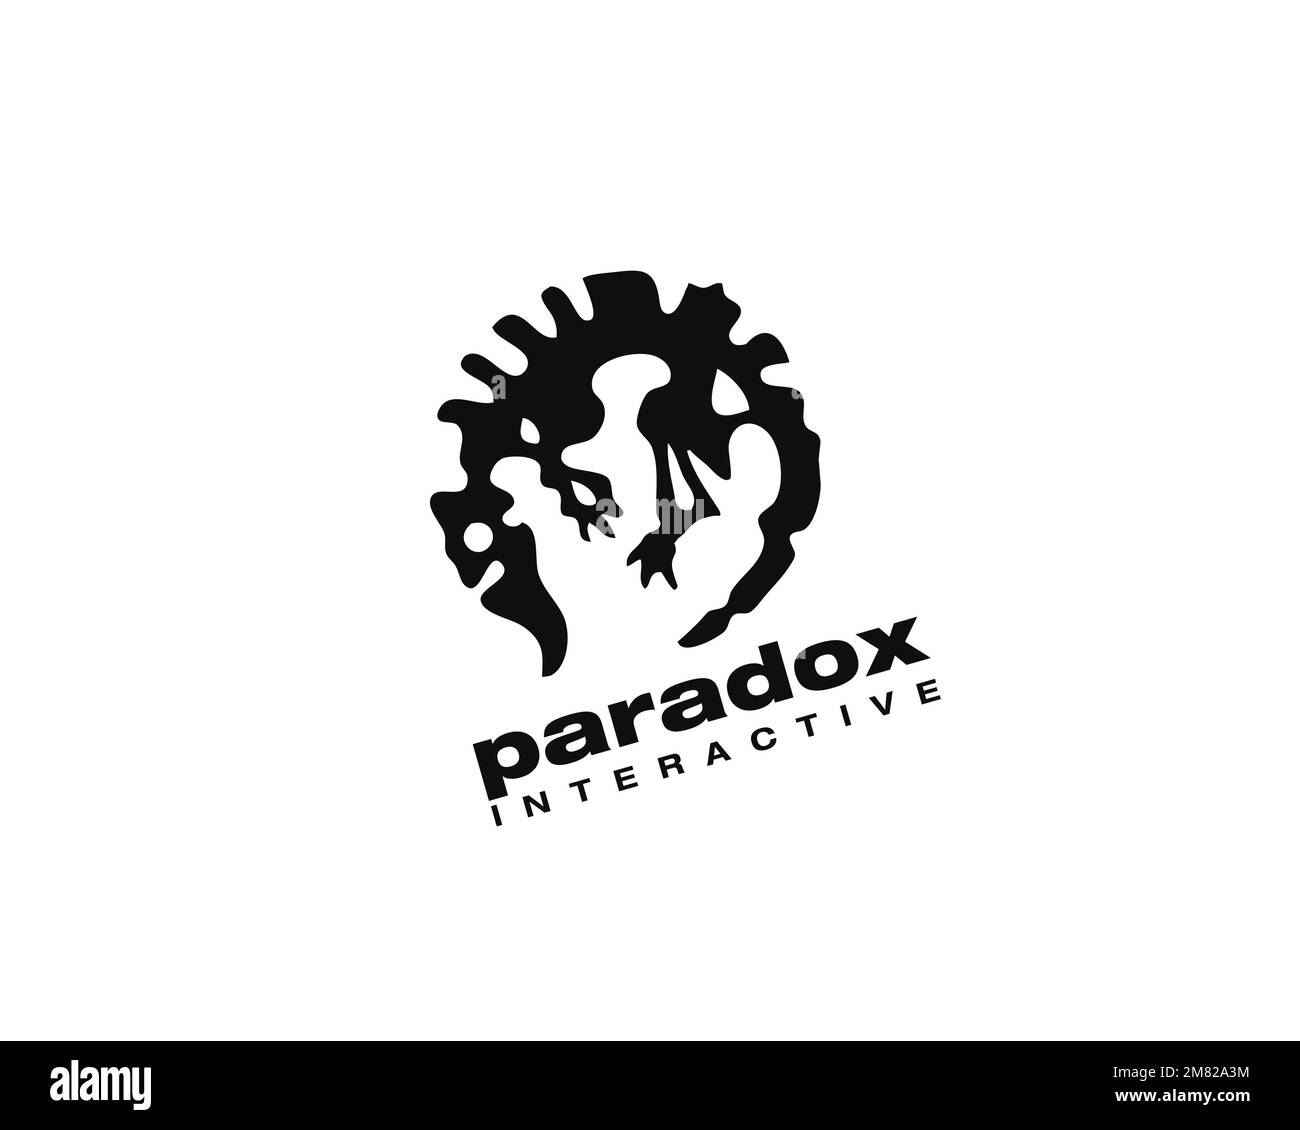 Paradox interattivo, logo ruotato, sfondo bianco Foto Stock